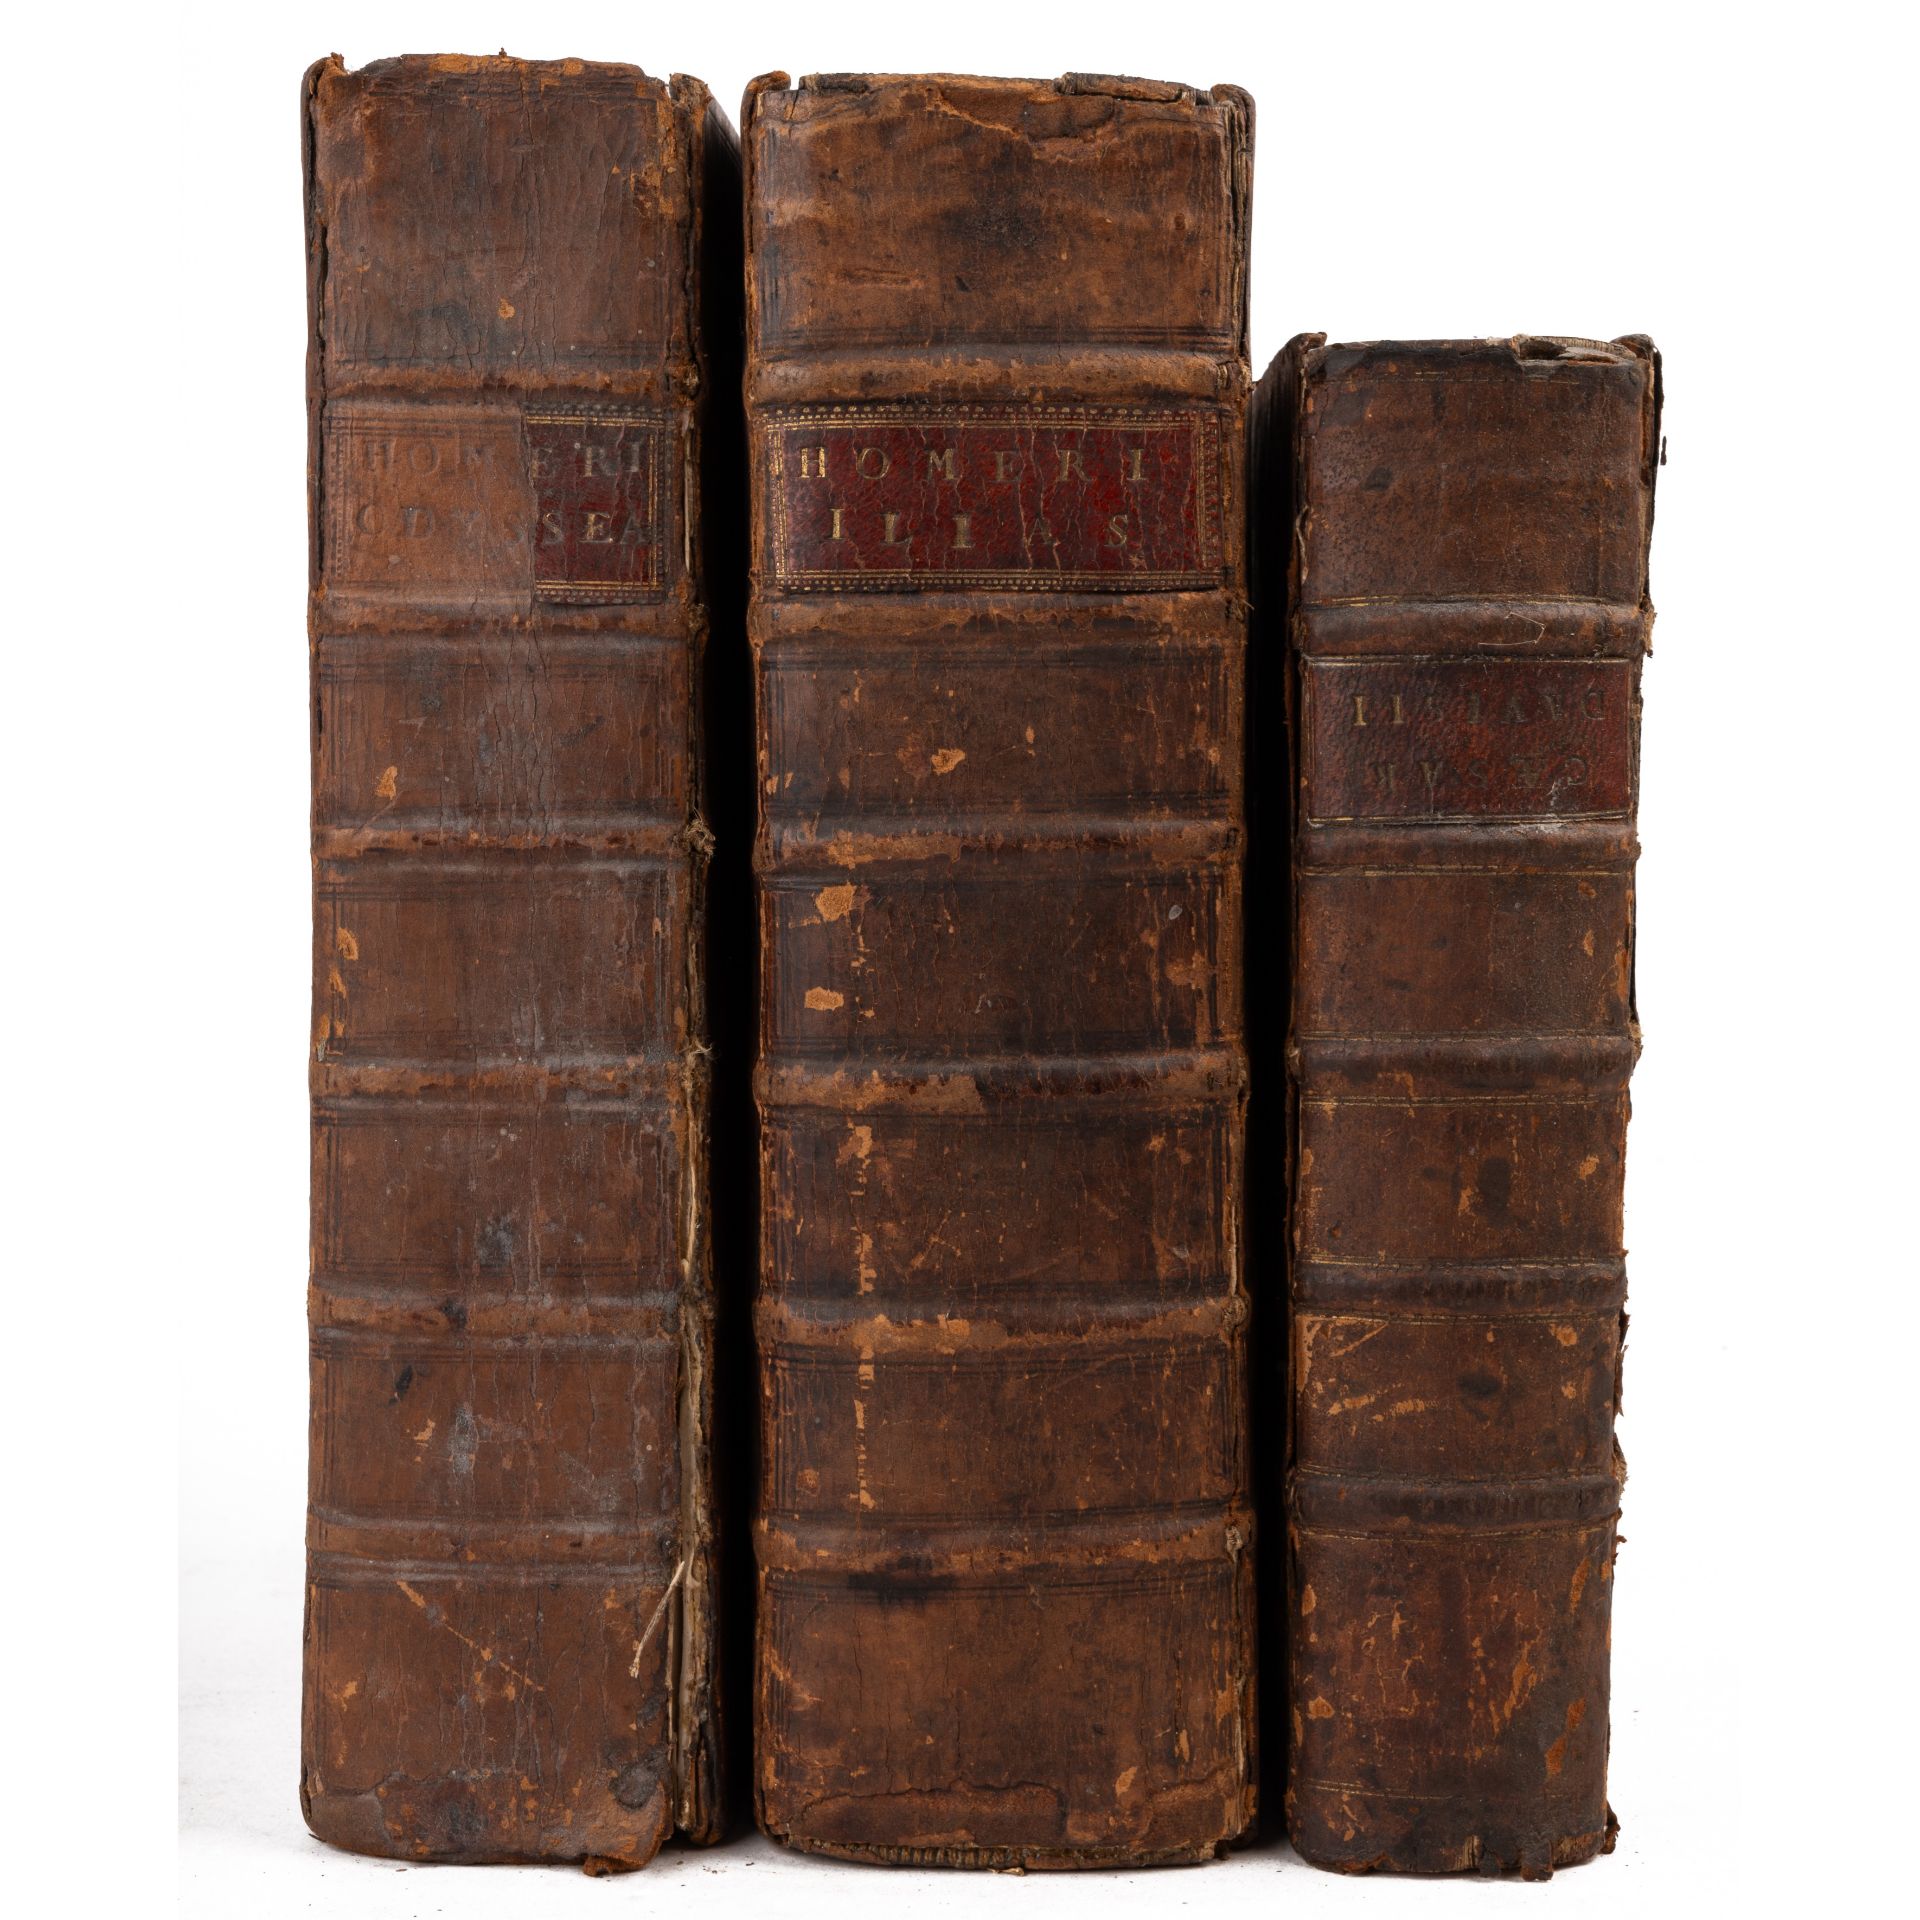 Homer 'Ilias and Odyssea' Joshua Barnes Ed. 2 vols. Crownfield, Cambridge 1711. 4to. allegorical